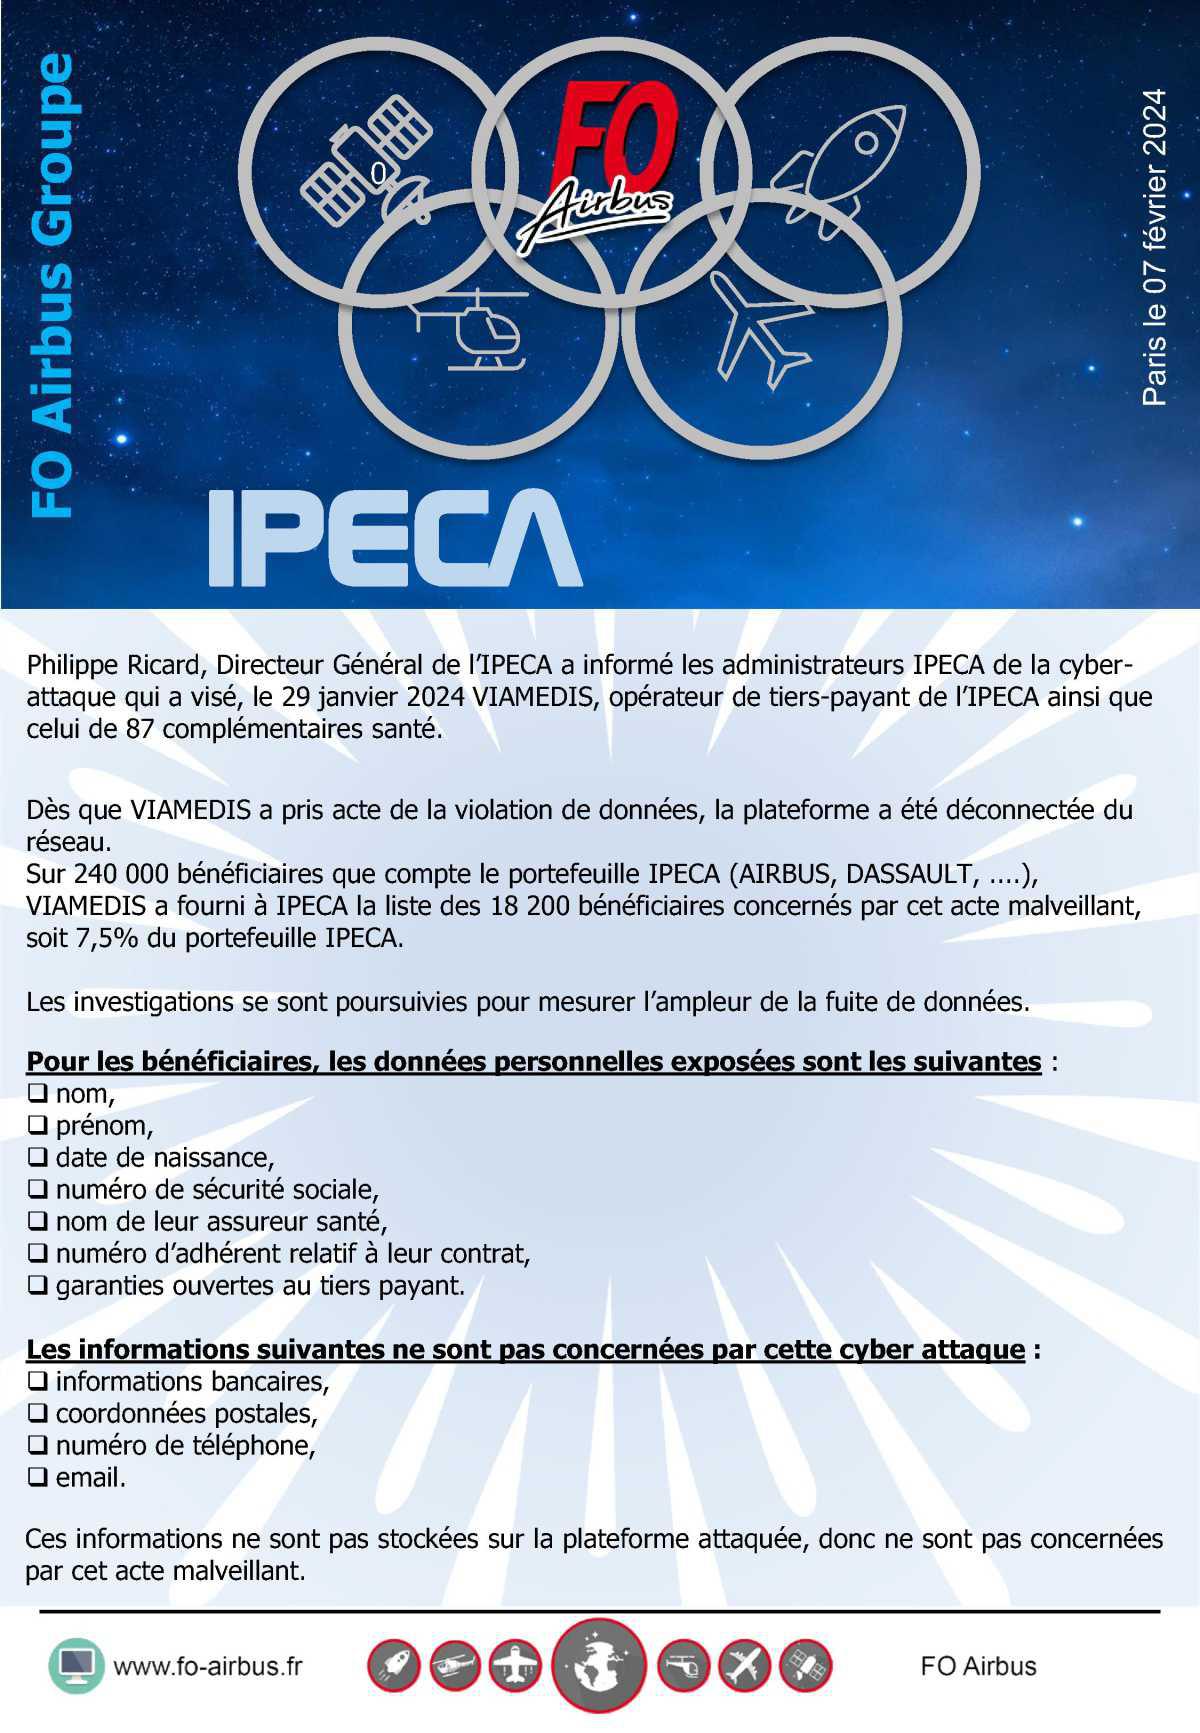 IPECA: cyber attaque sur Viamedis